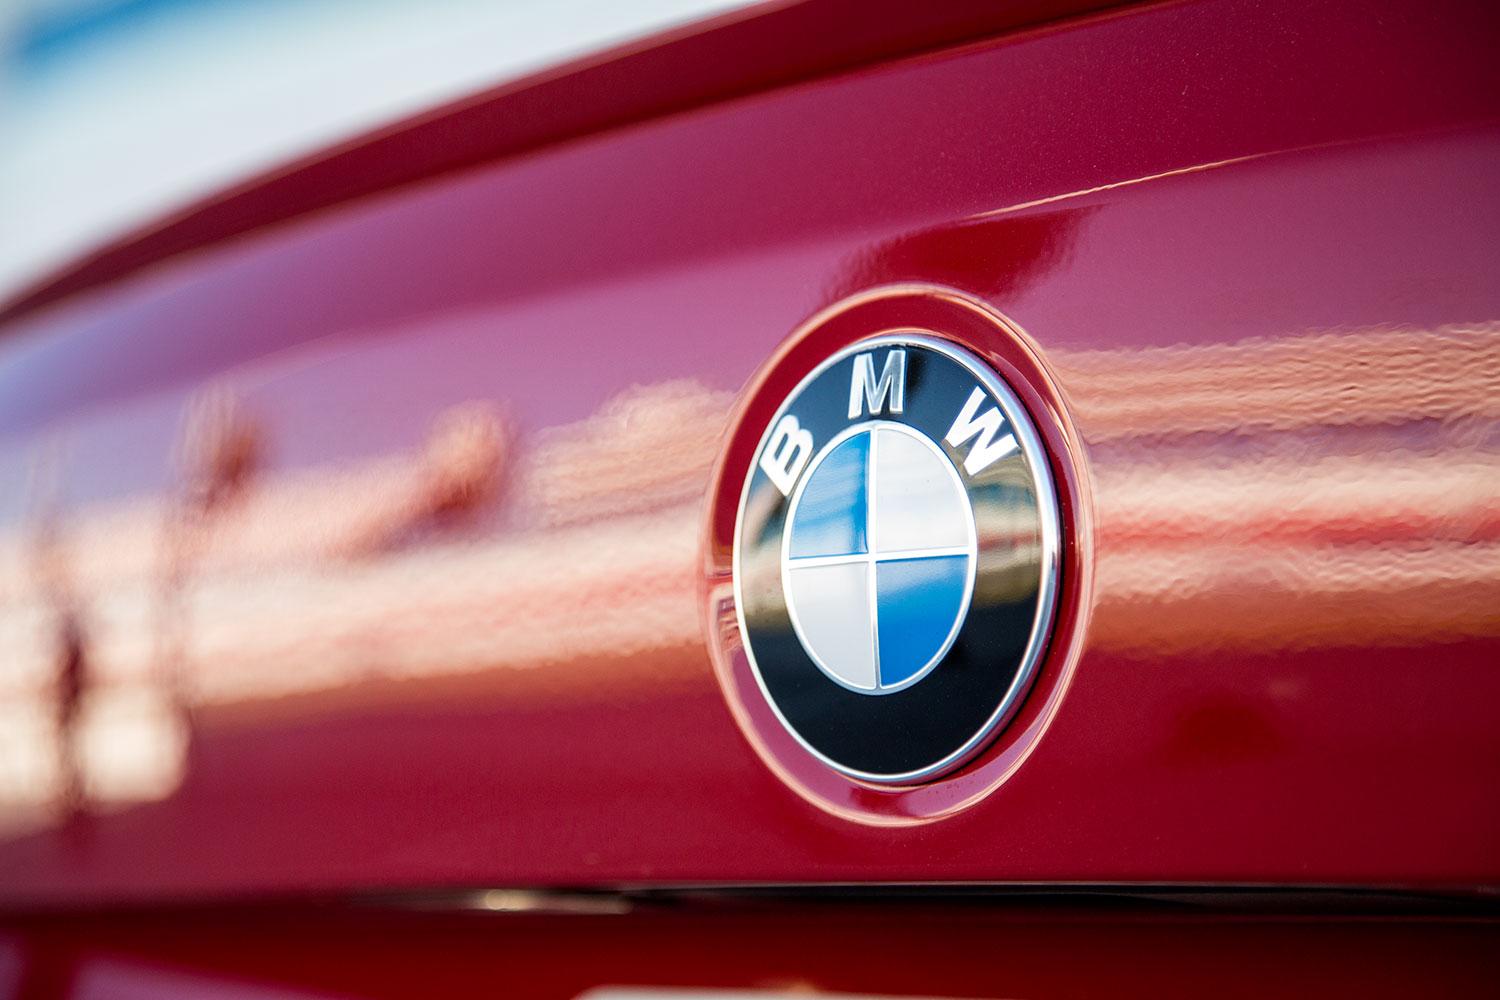 2014 BMW M235i back logo